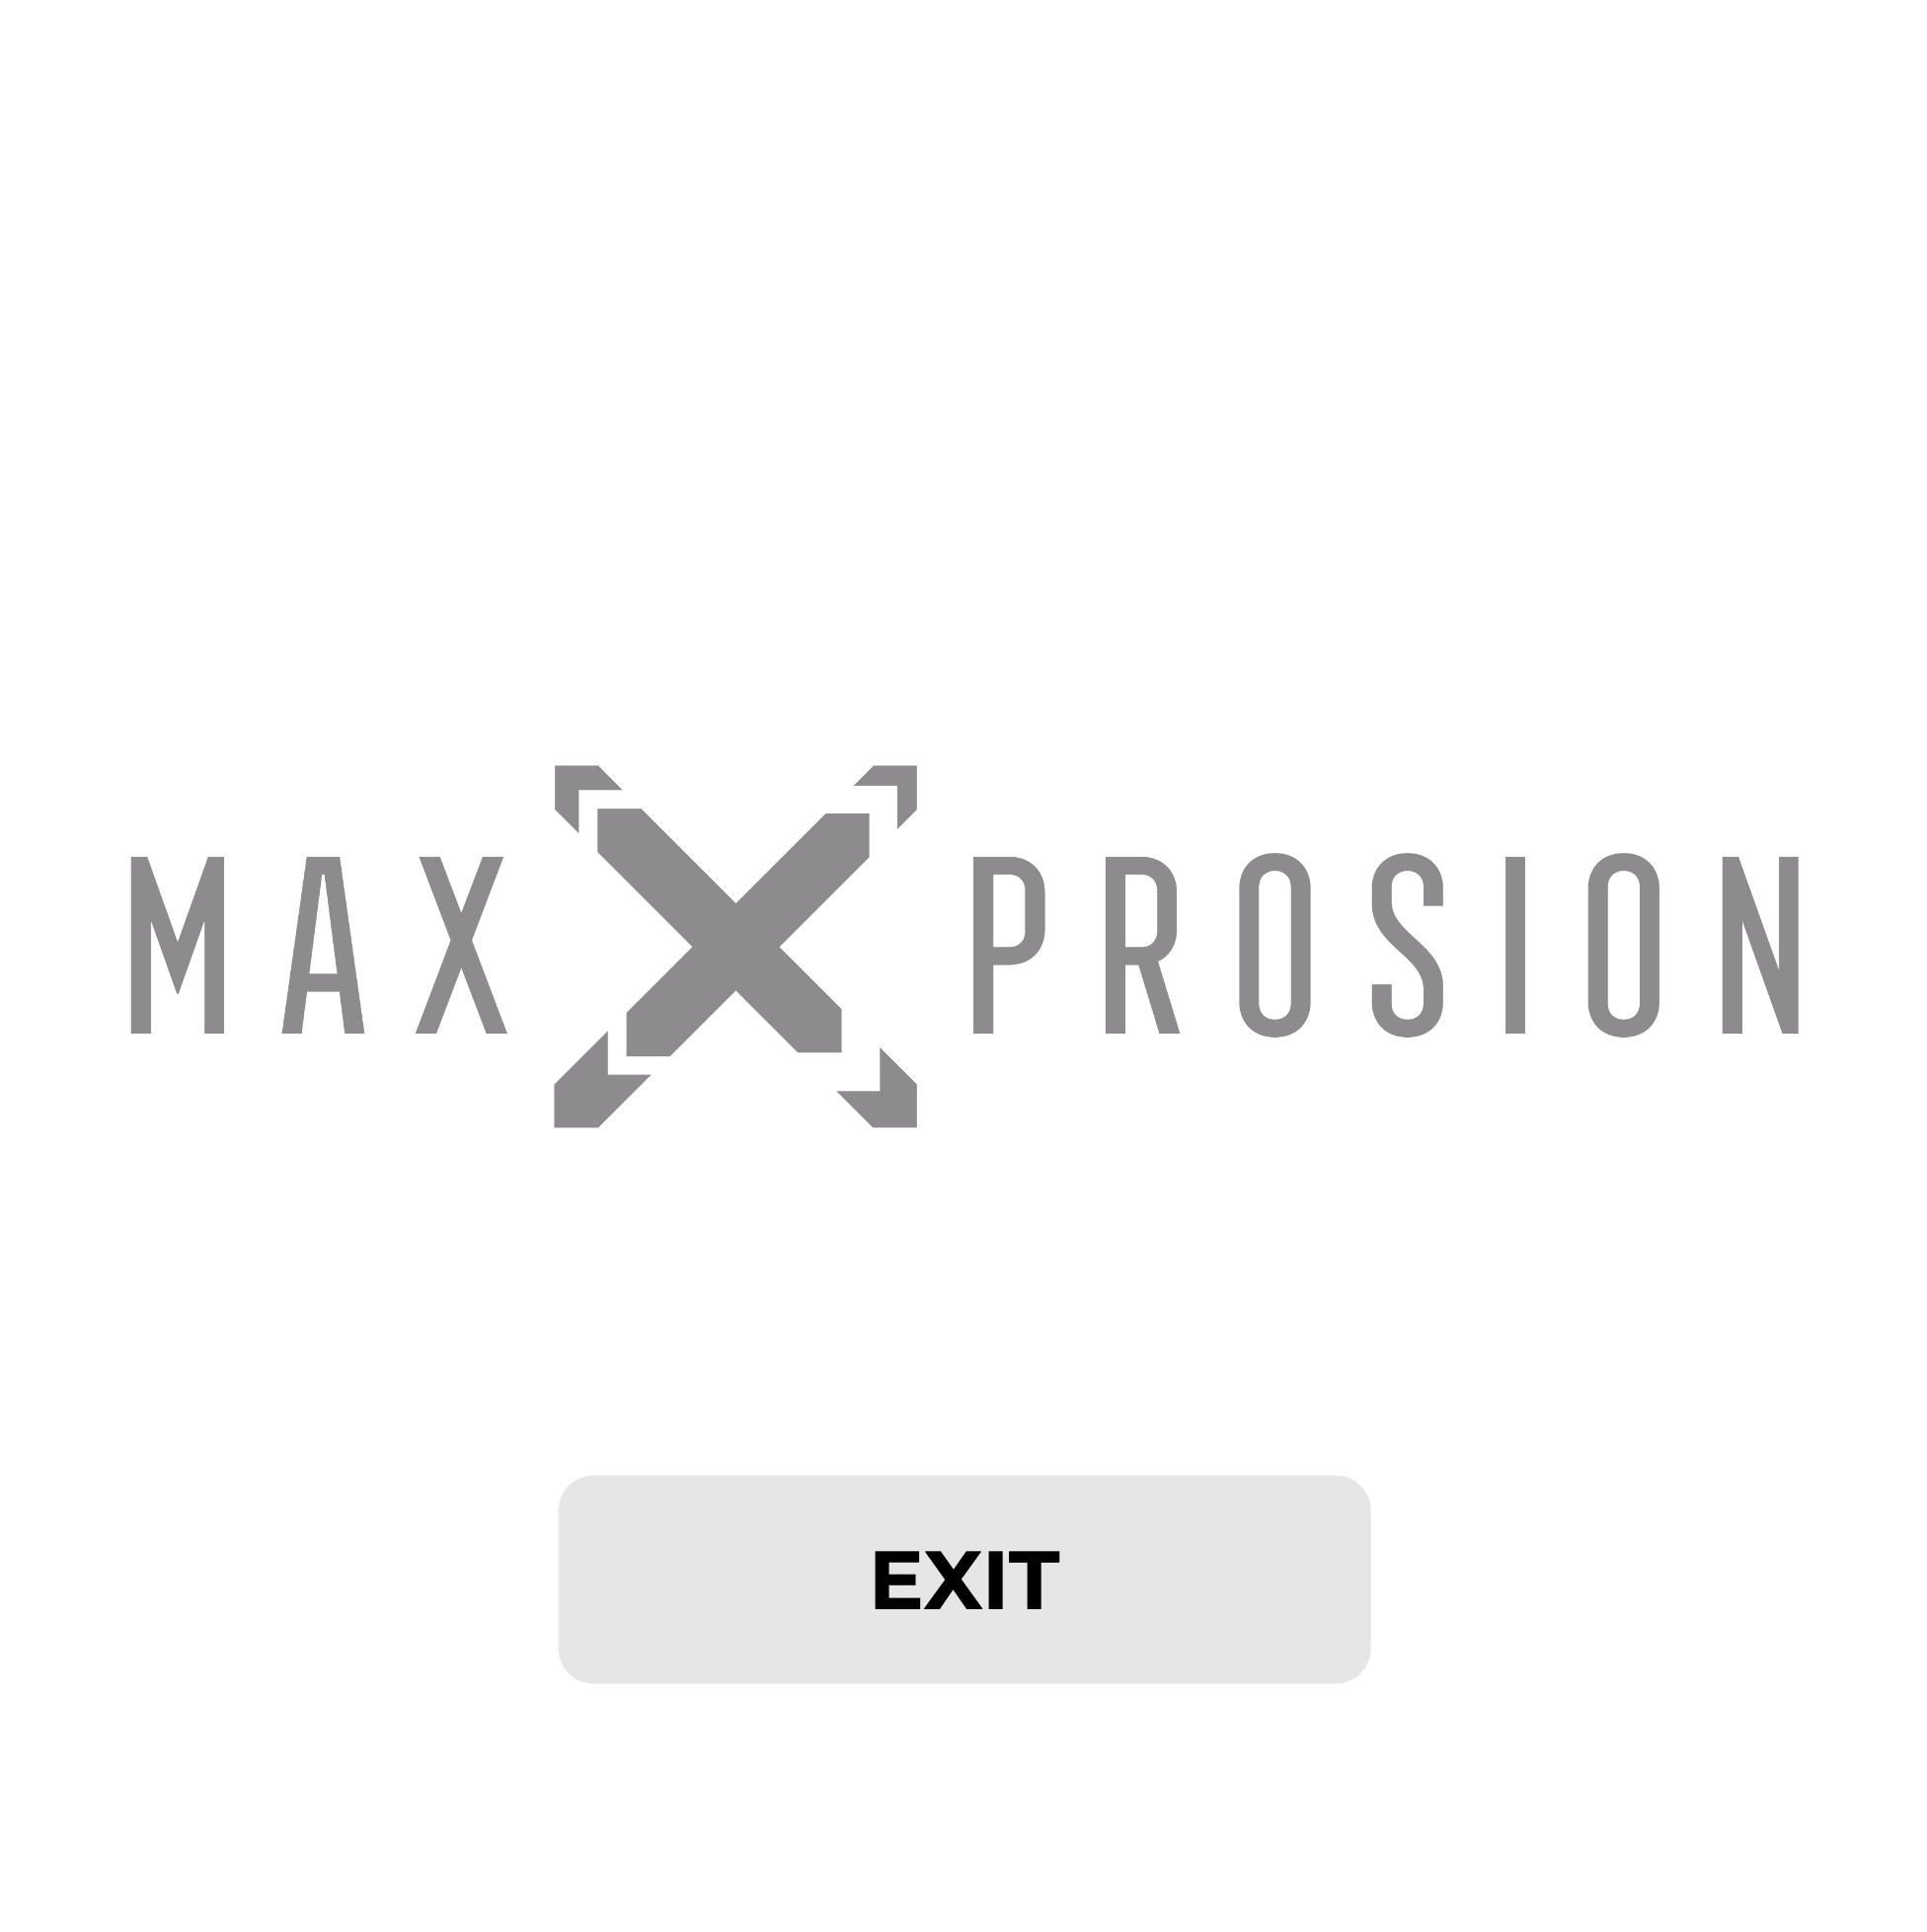 Maxxprosion Logo Exit